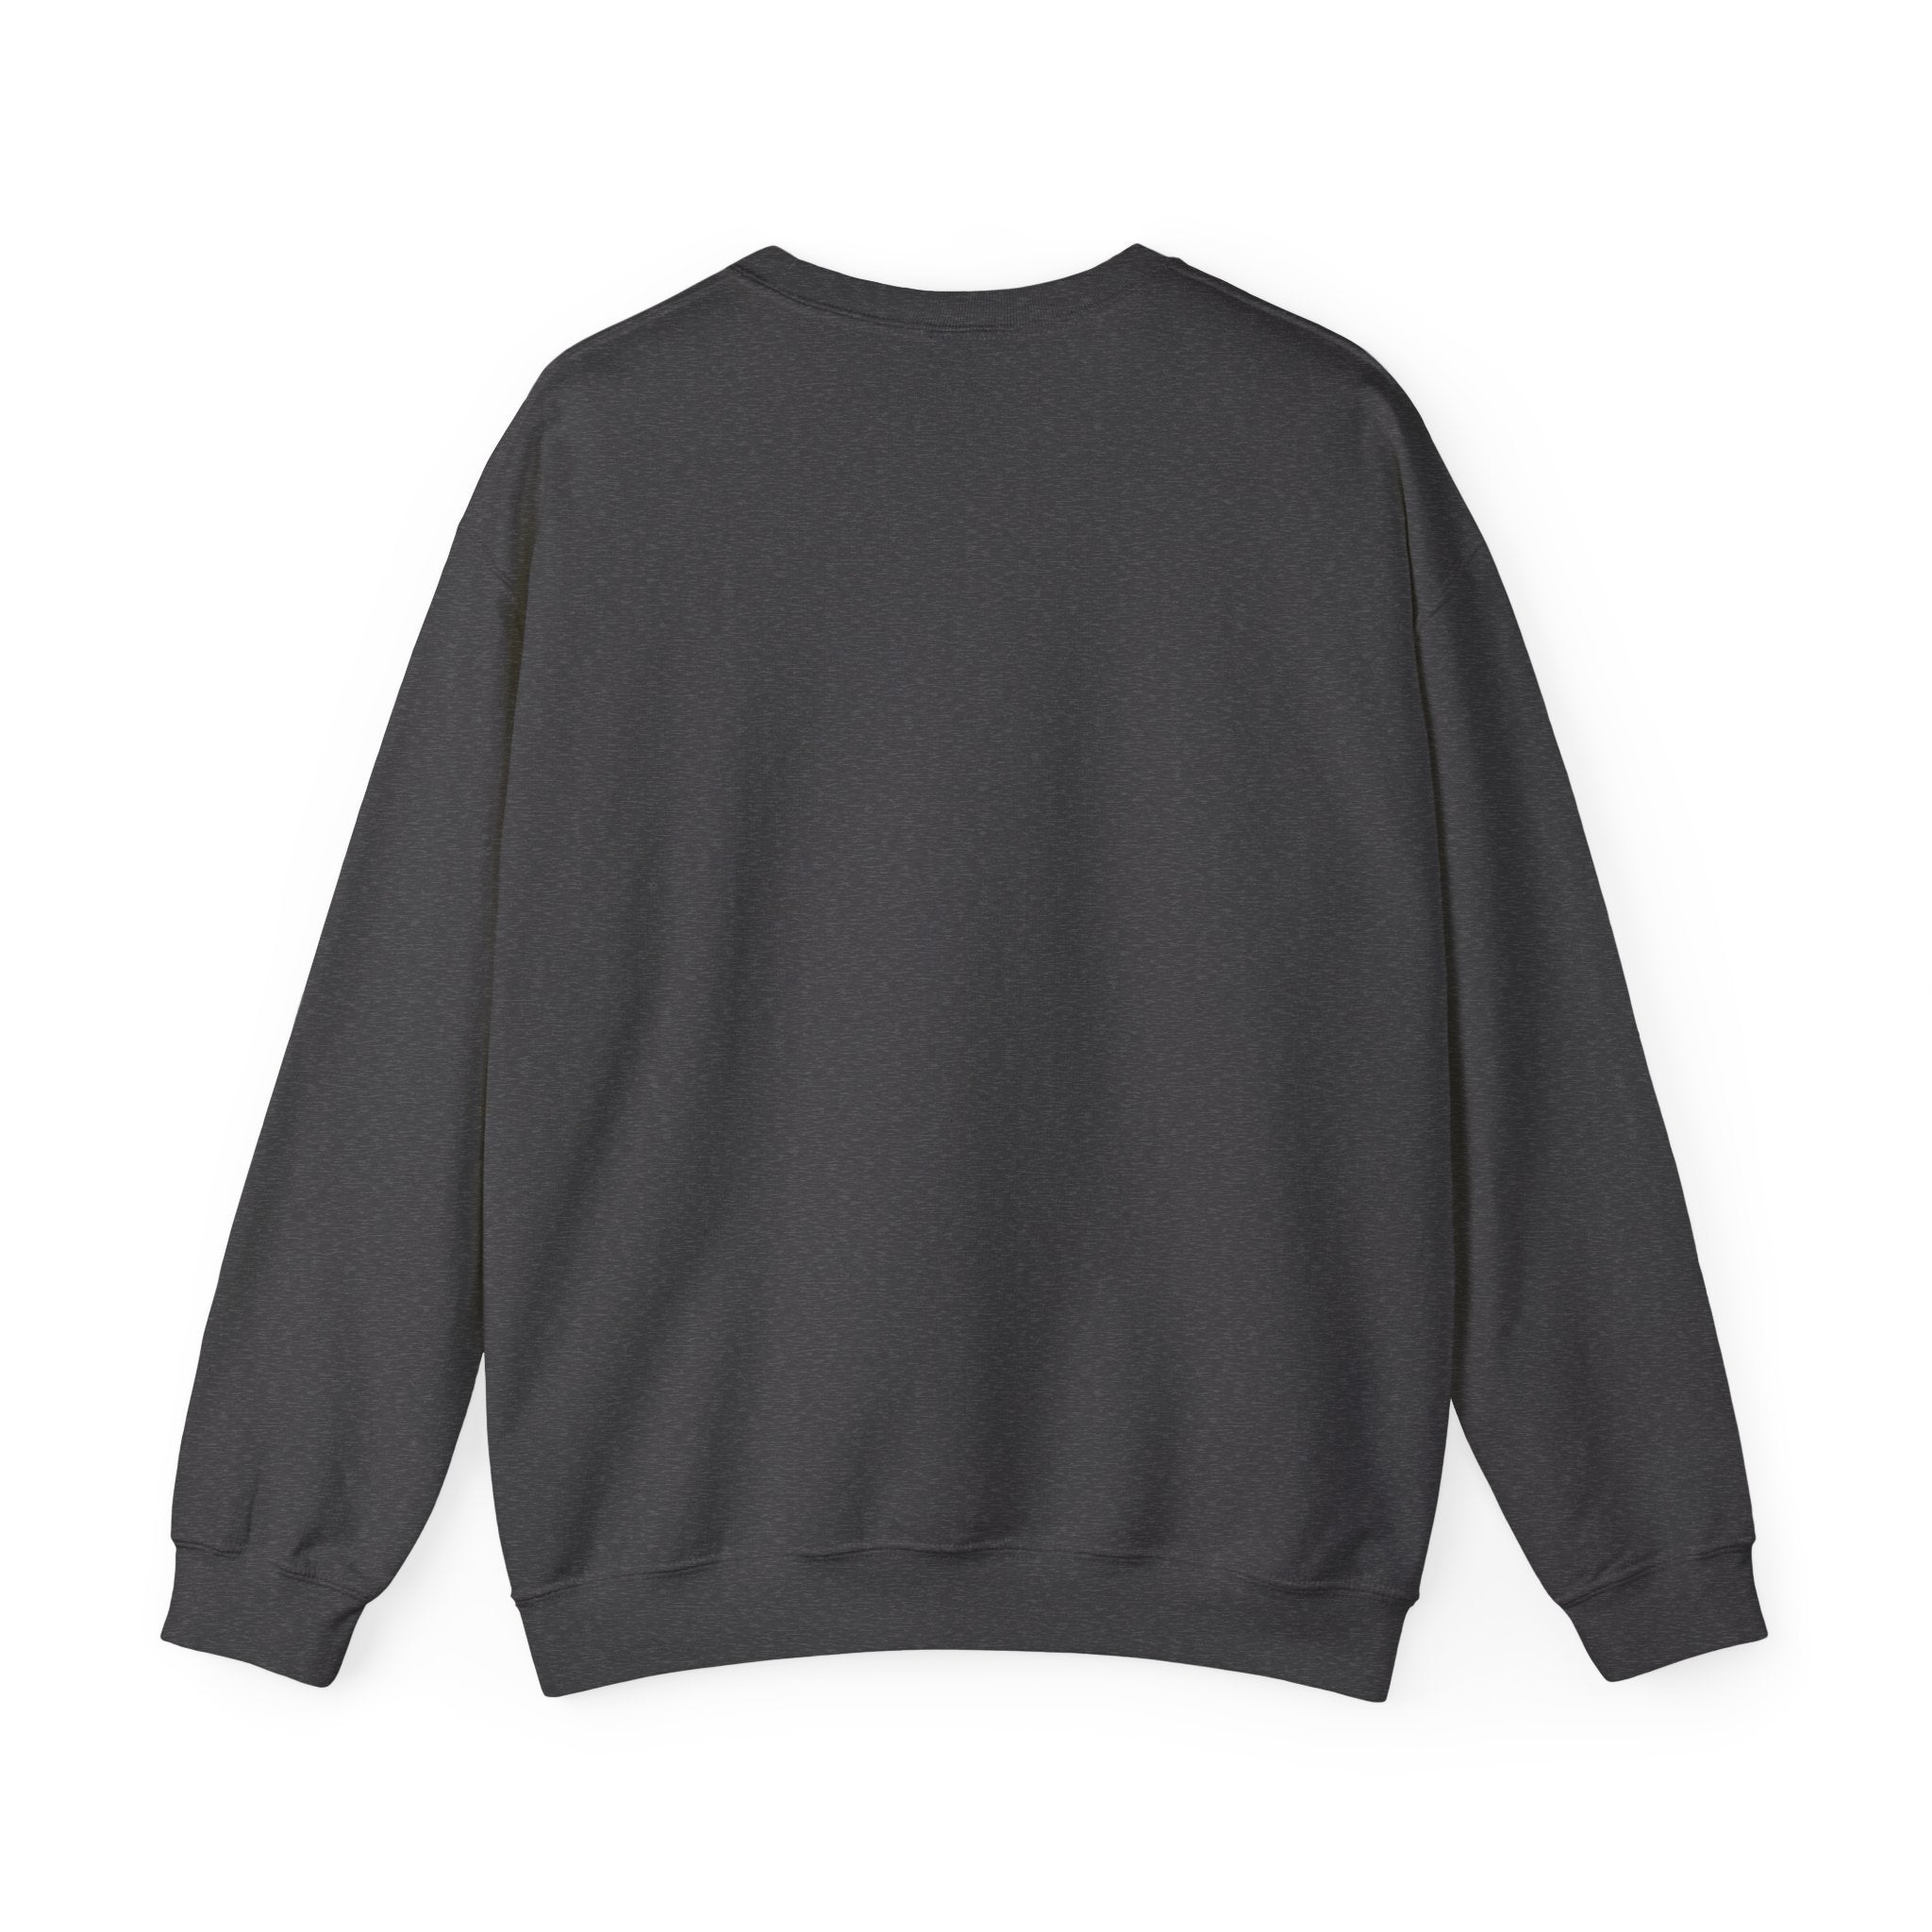 All That Glitters Is Not Gold  Unisex Heavy Blend™ Crewneck Sweatshirt, Men's Sweatshirt and Women's Sweatshirt